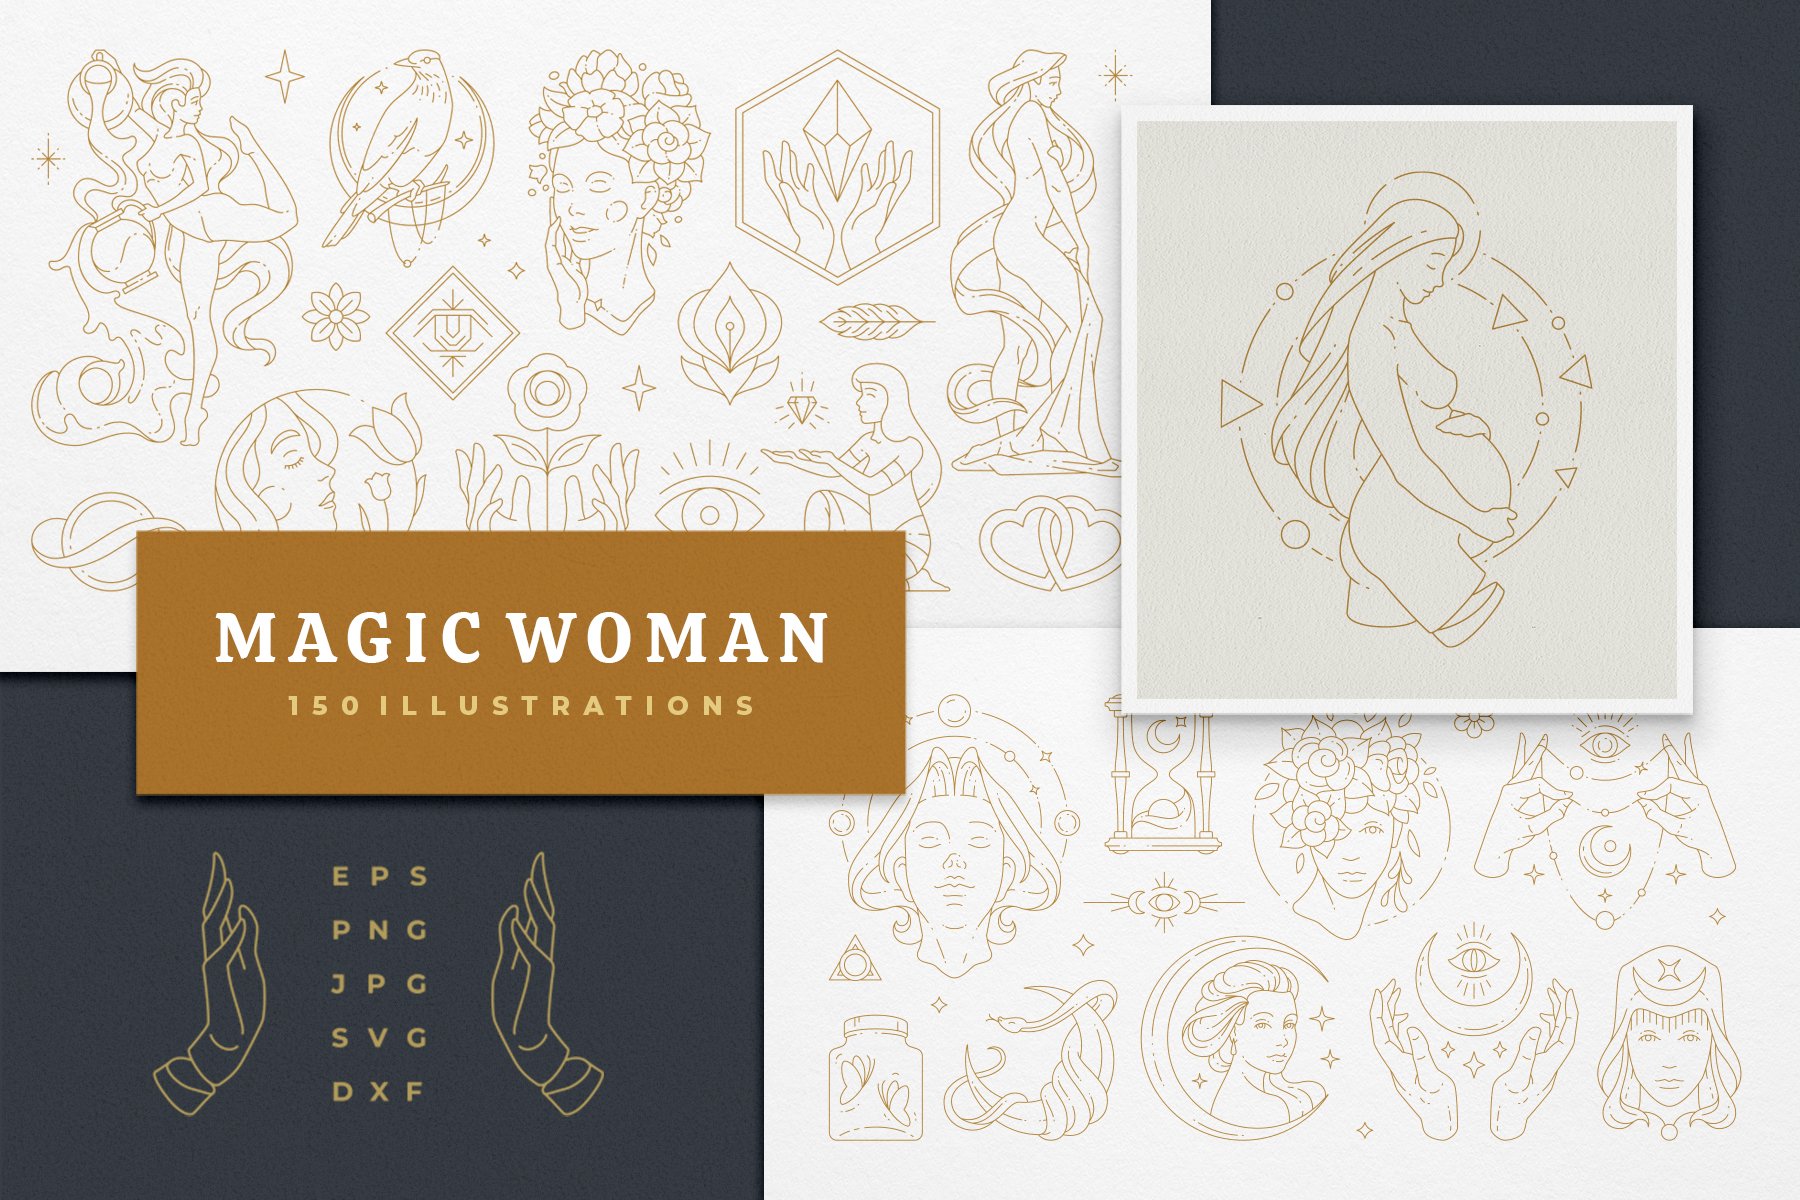 Magic Woman Feminine Illustrations cover image.